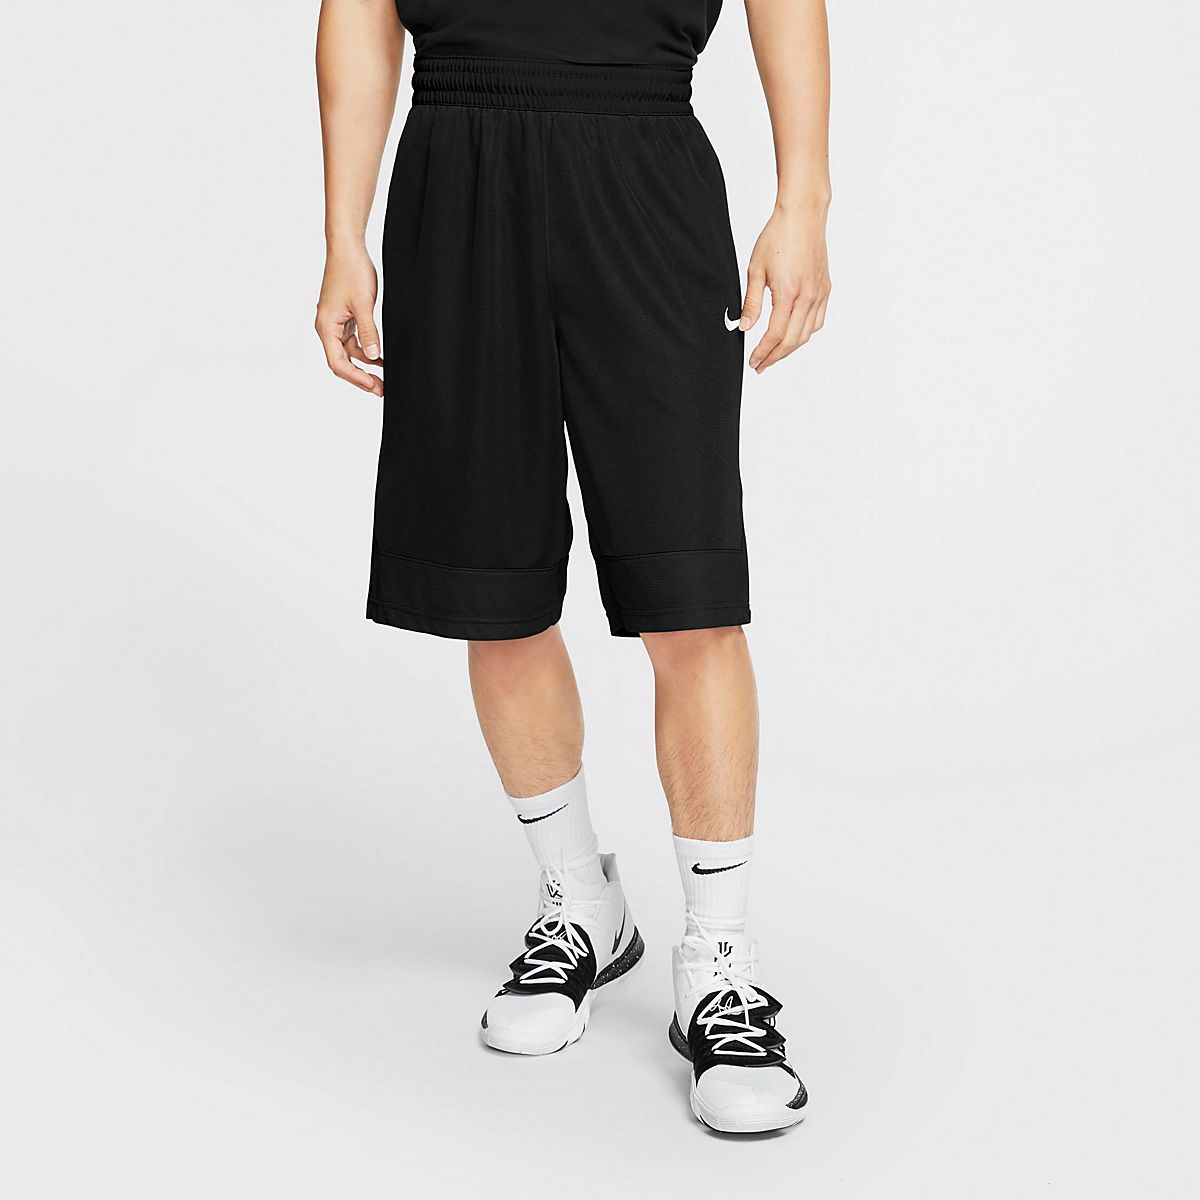 Nike Starting 5 Men's Dri-FIT 11 Basketball Shorts.